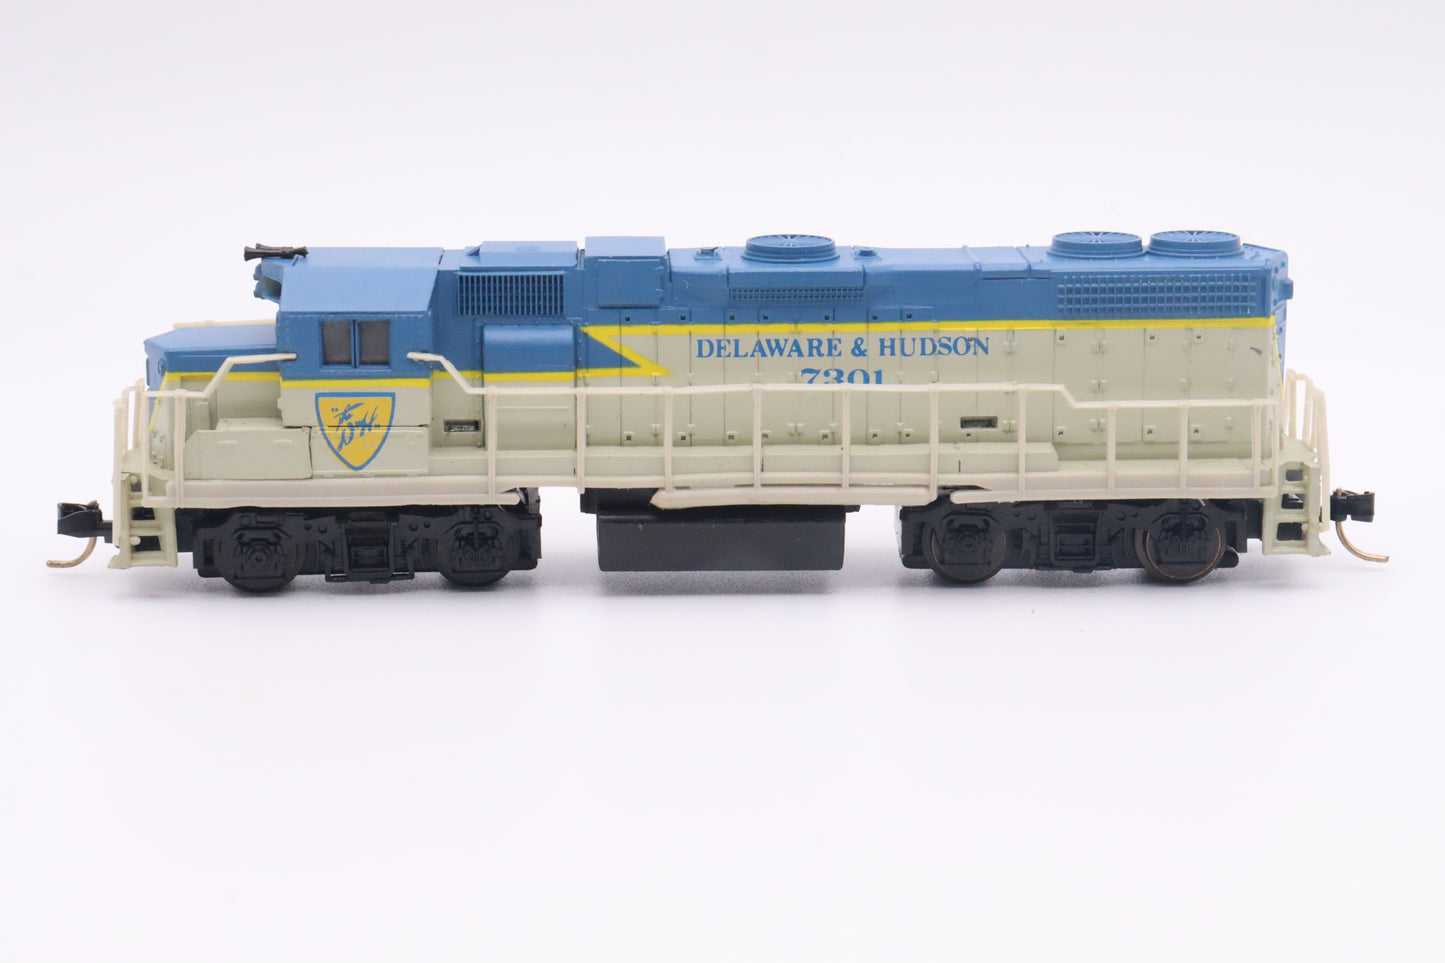 LL-7848 - GP-38 Locomotive - Delaware & Hudson - DH-7301